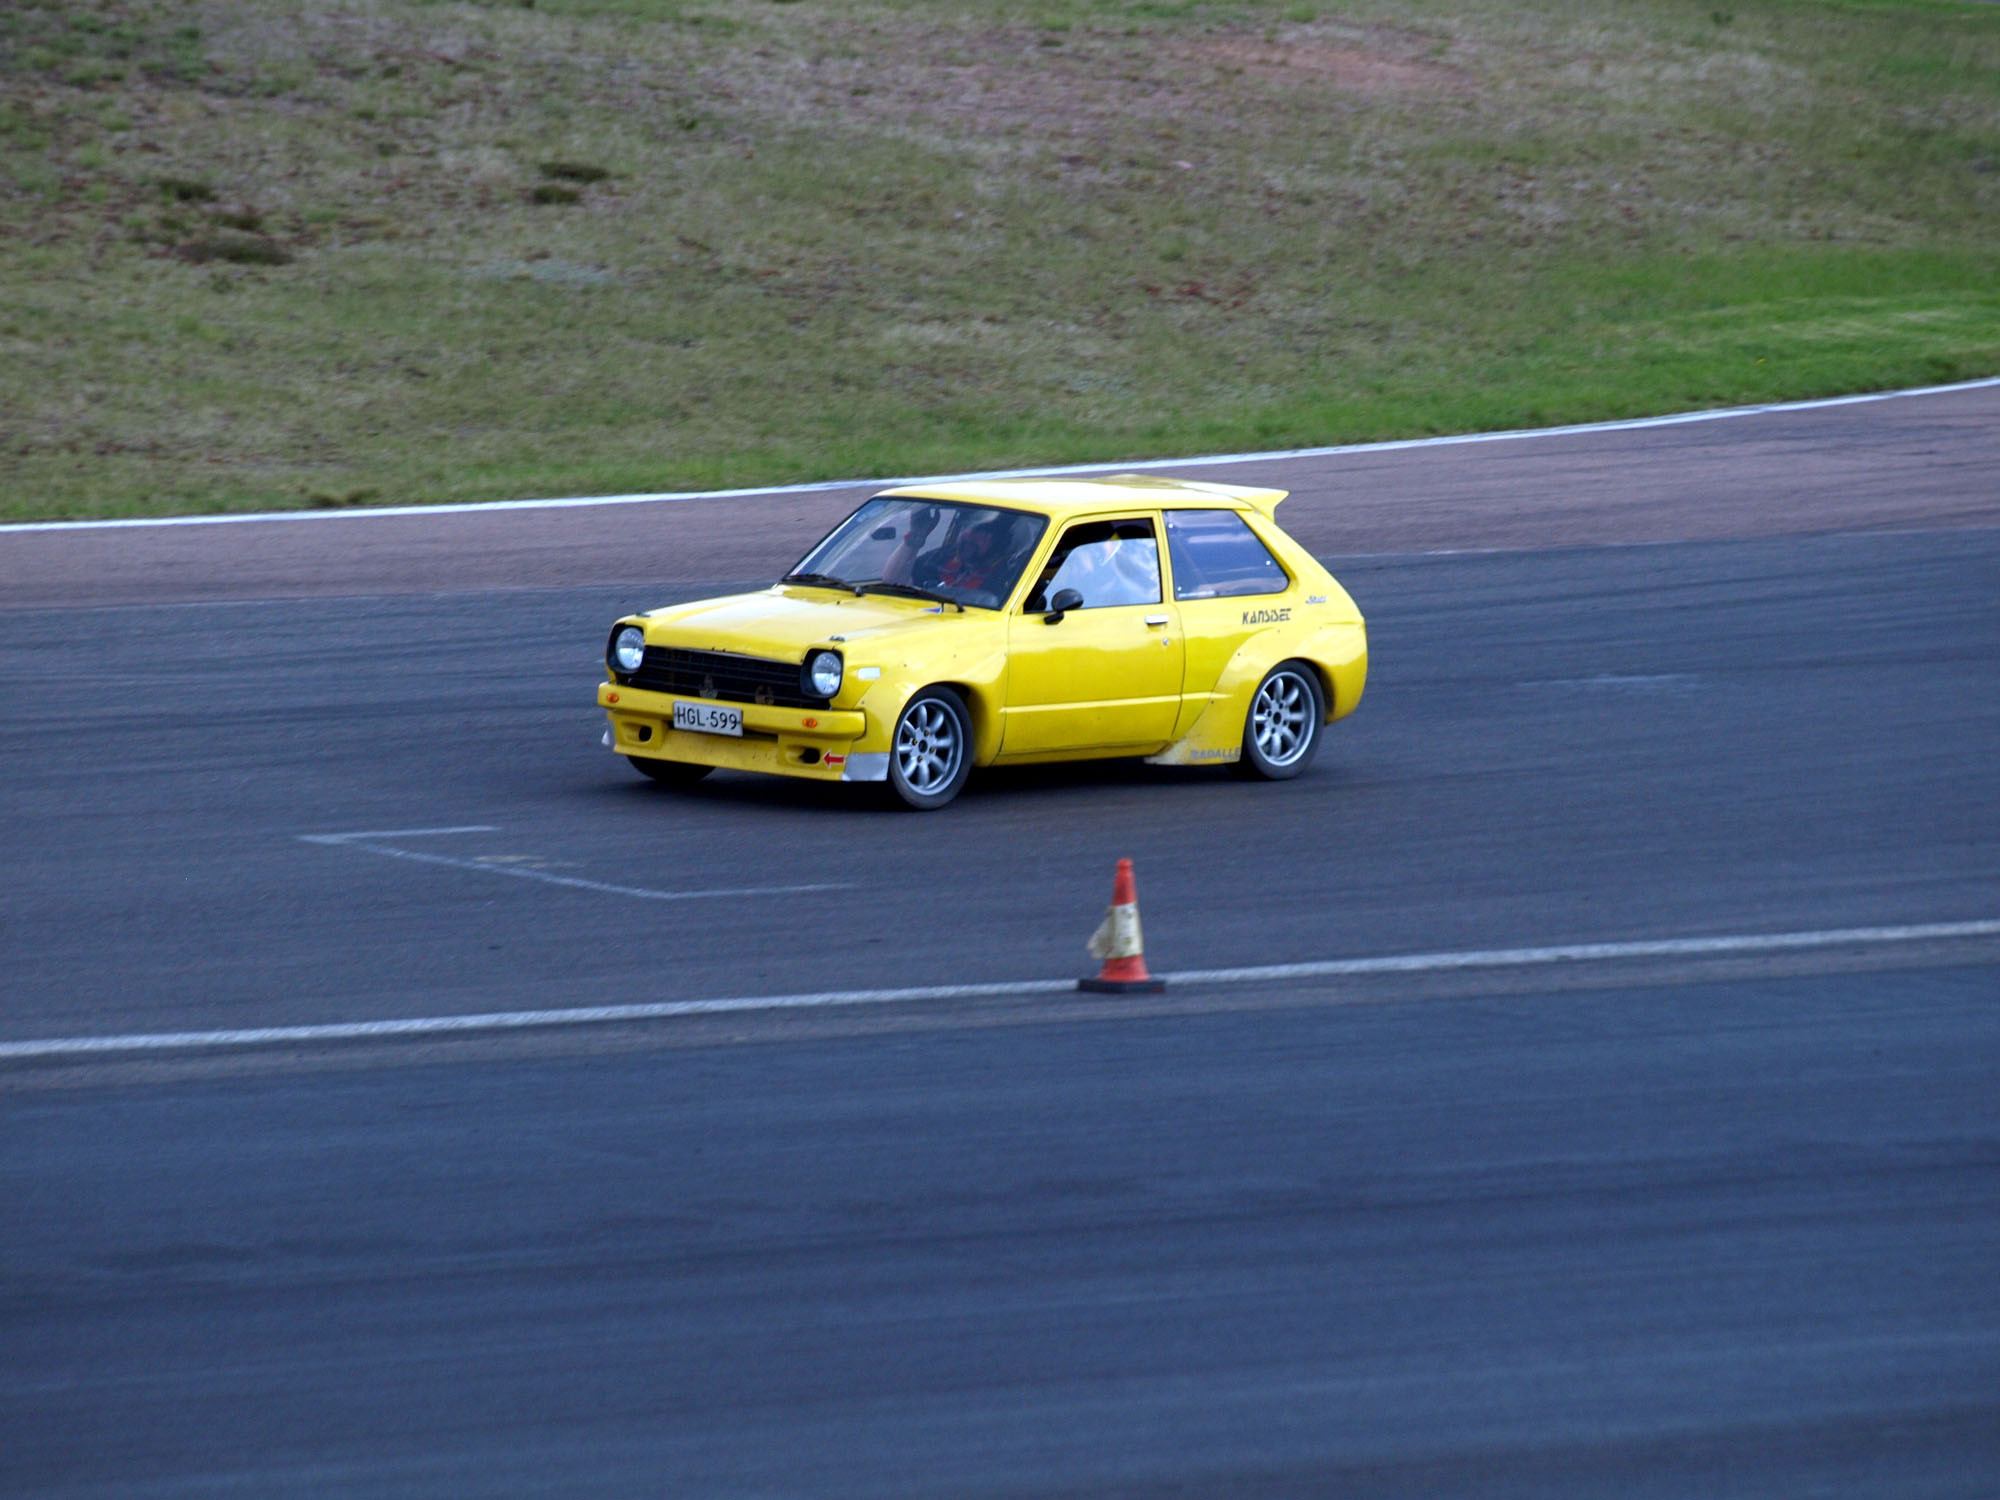 Fintoys ratapÃ¤ivÃ¤ 23.5.2014 Alastaro Circuit, Yellow Toyota Starlet KP60 on race track